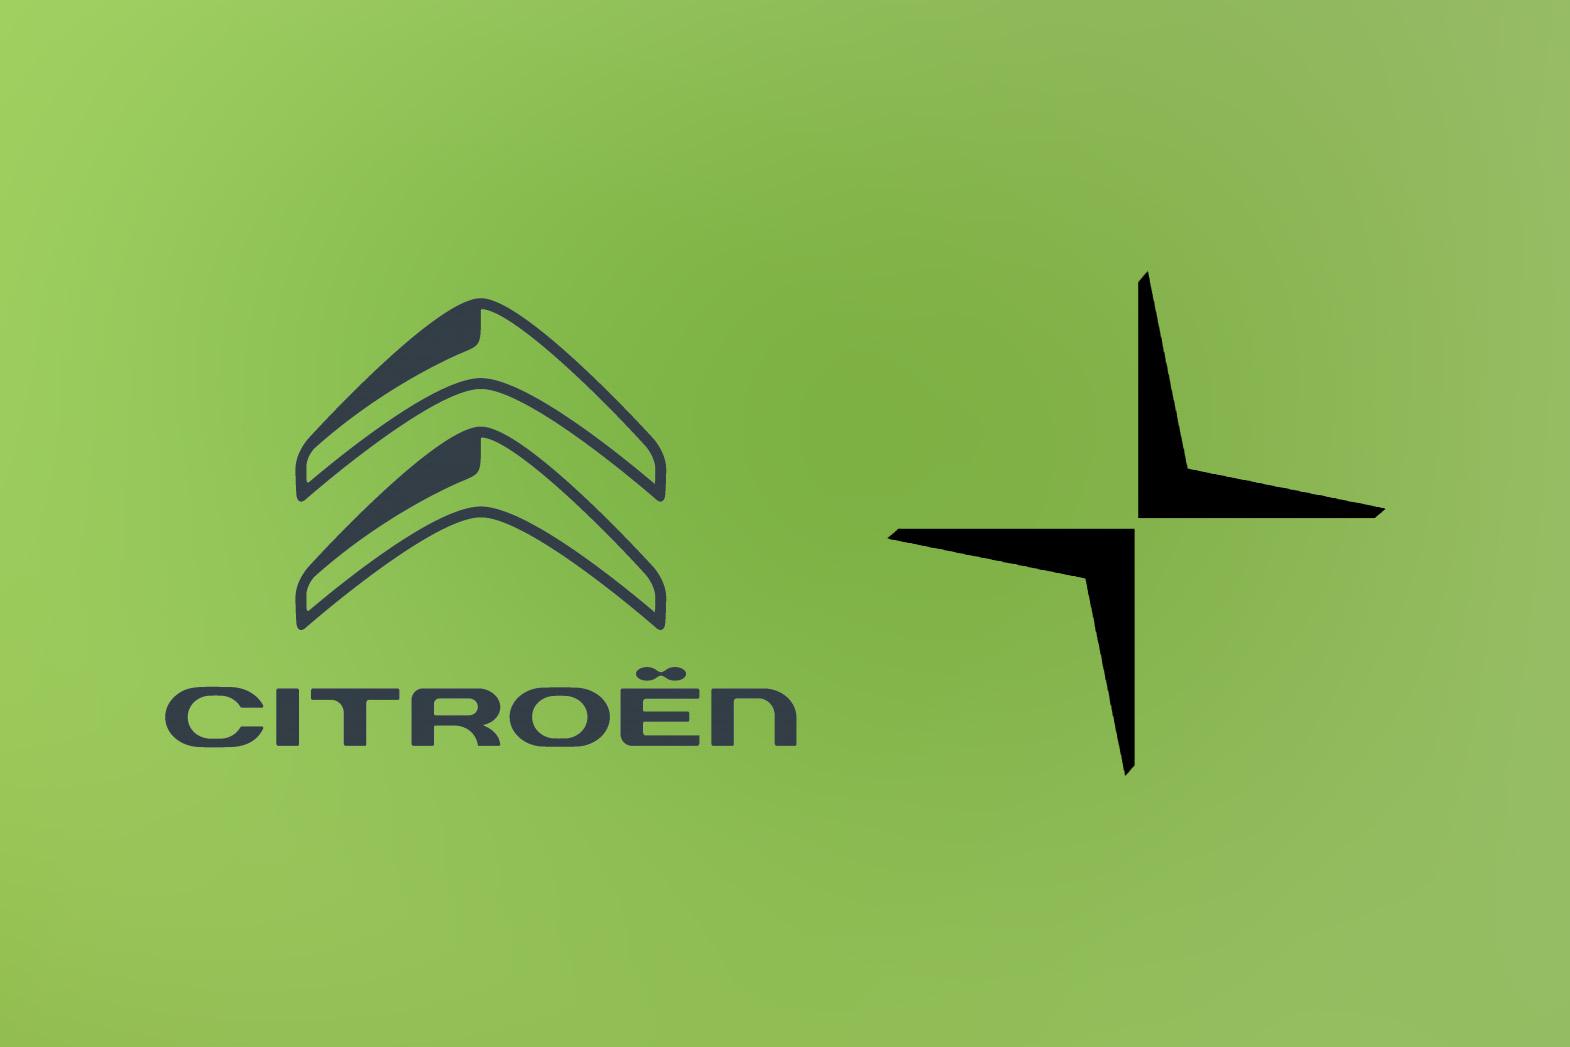 Citroën logo -  France